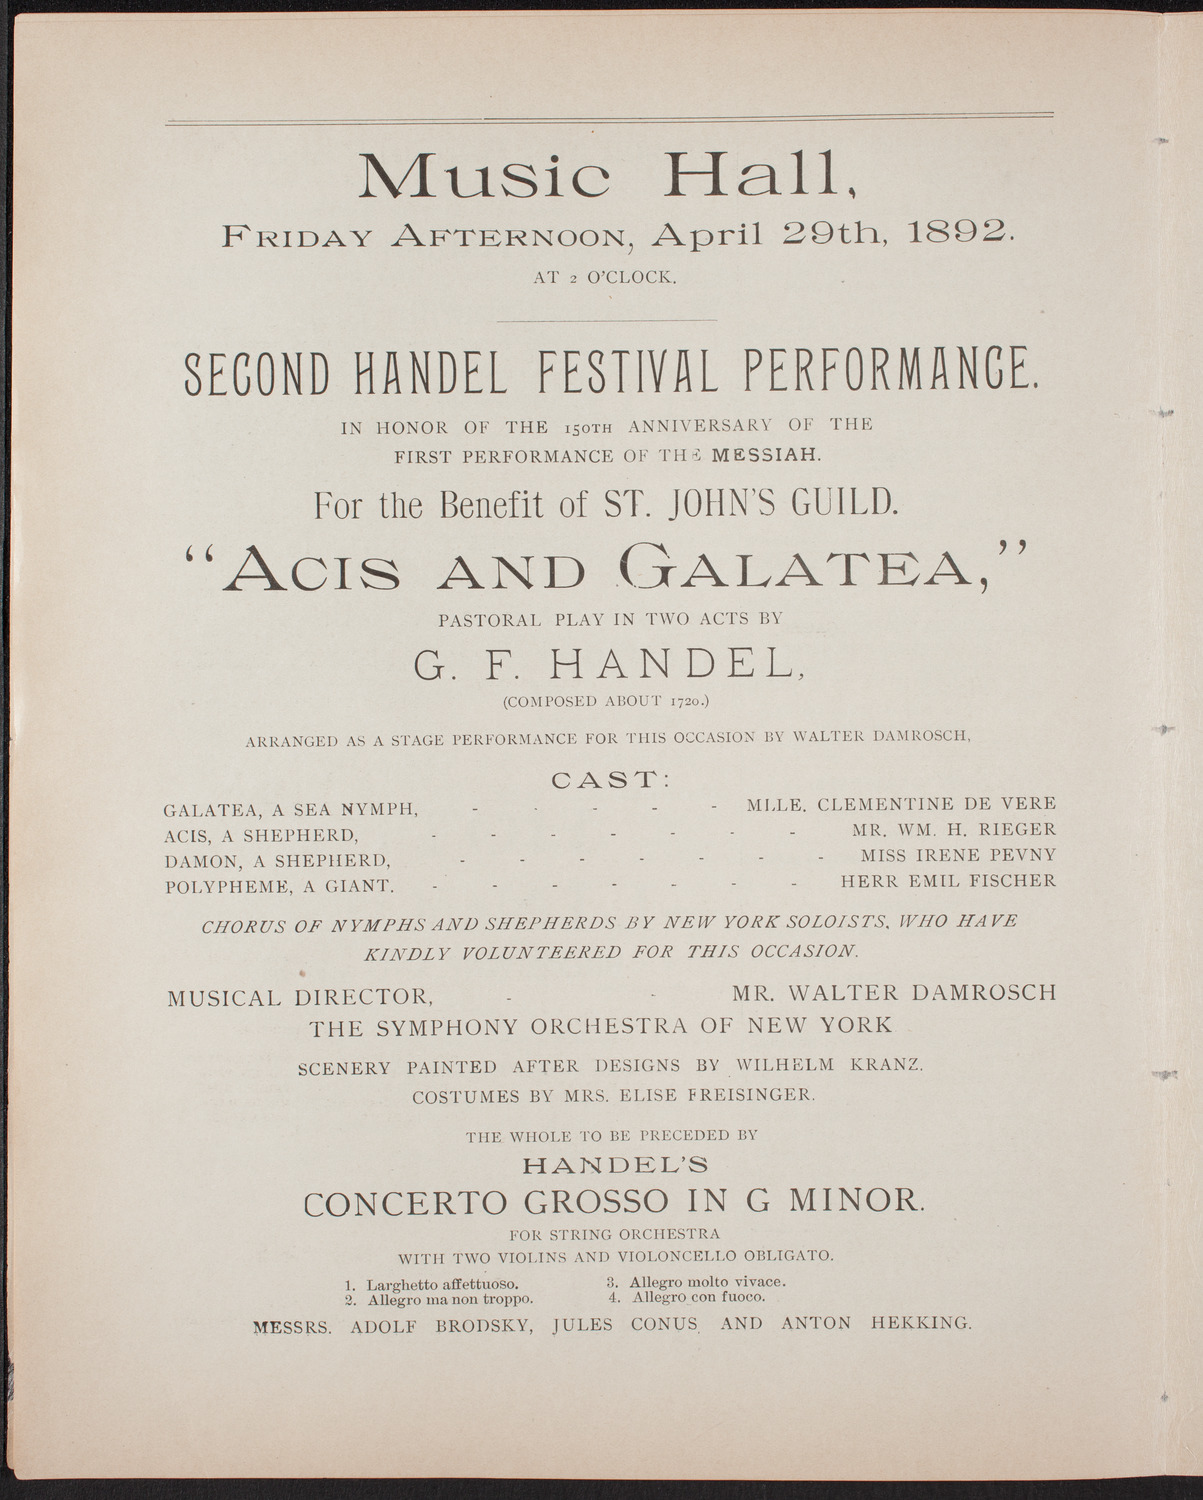 New York Symphony Orchestra: Handel Festival, April 29, 1892, program page 6